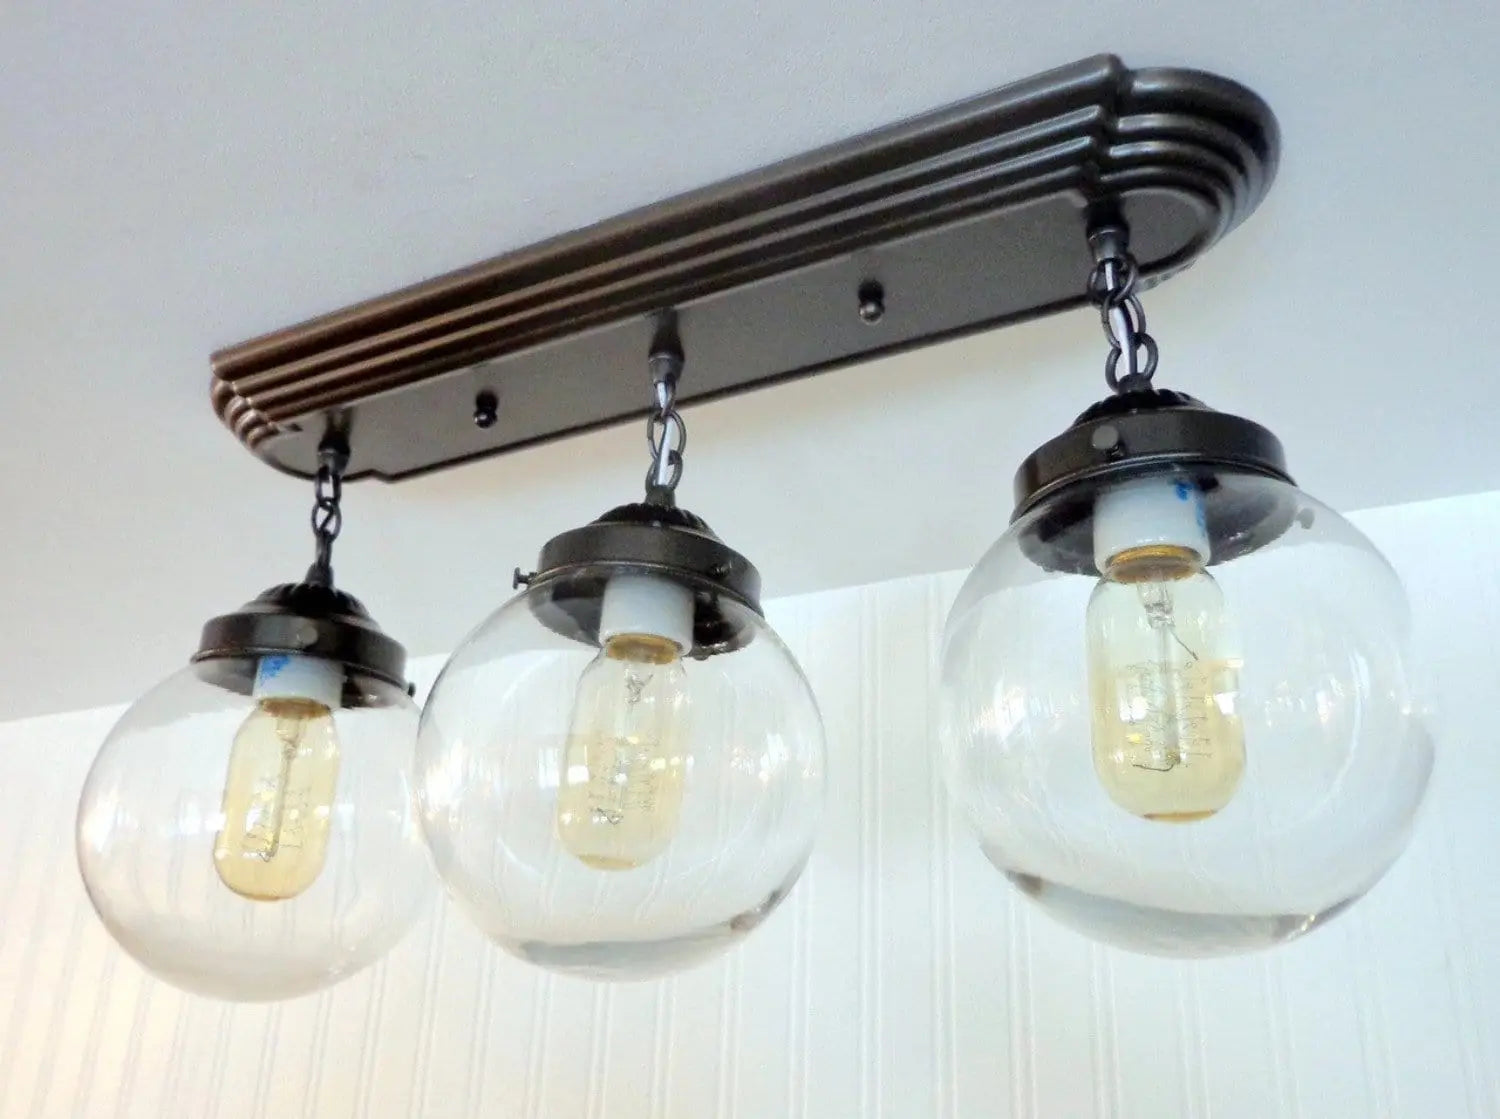 Biddeford II. Modern Ceiling Light Fixtures Rectangular Trio - The Lamp Goods